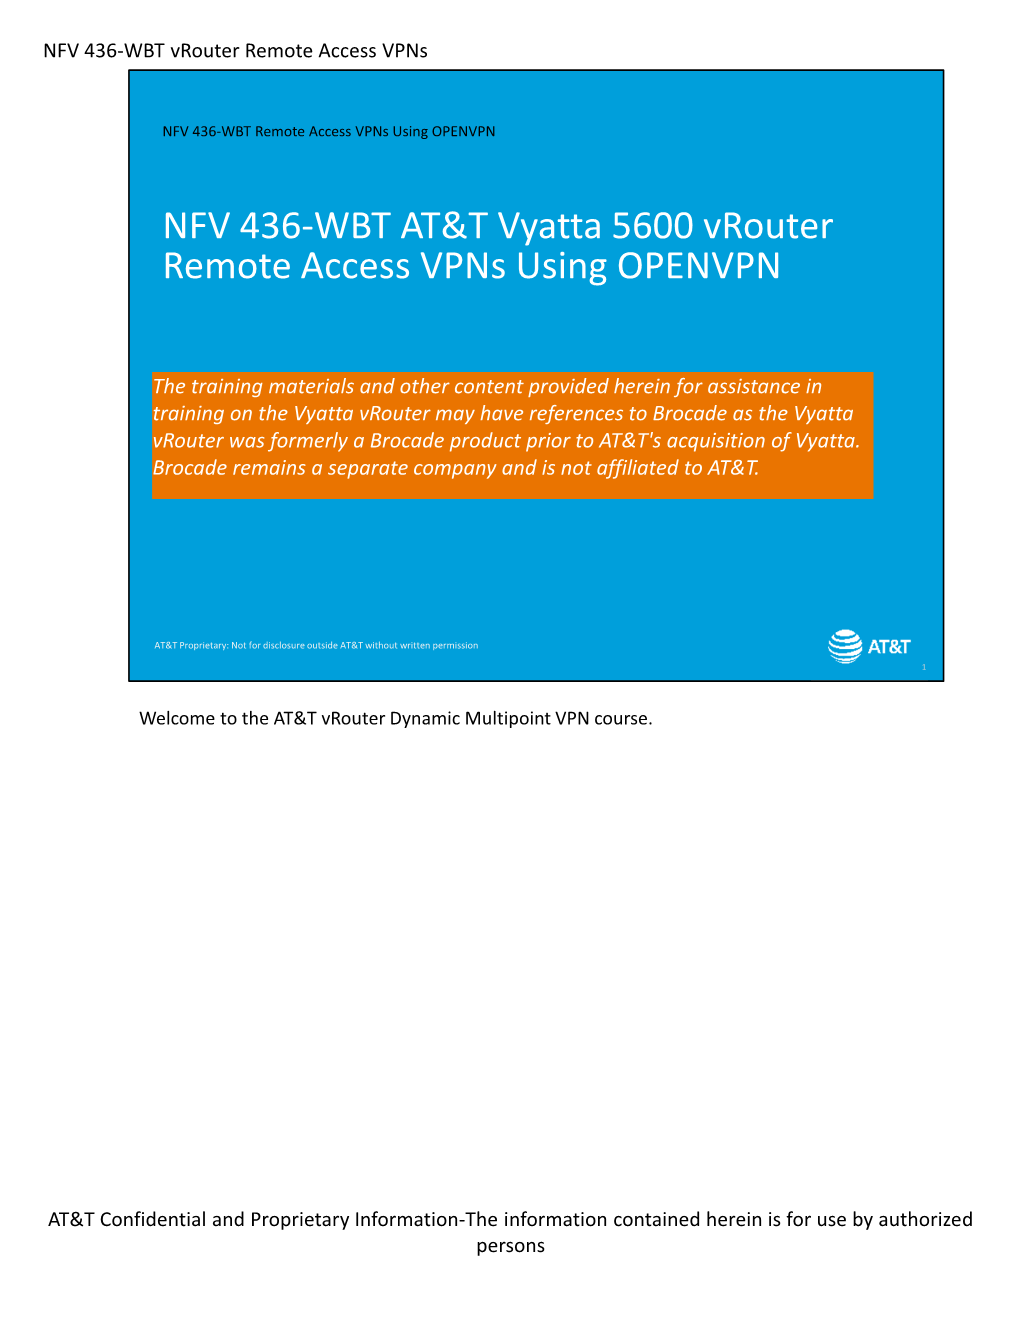 NFV 436-WBT AT&T Vyatta 5600 Vrouter Remote Access Vpns